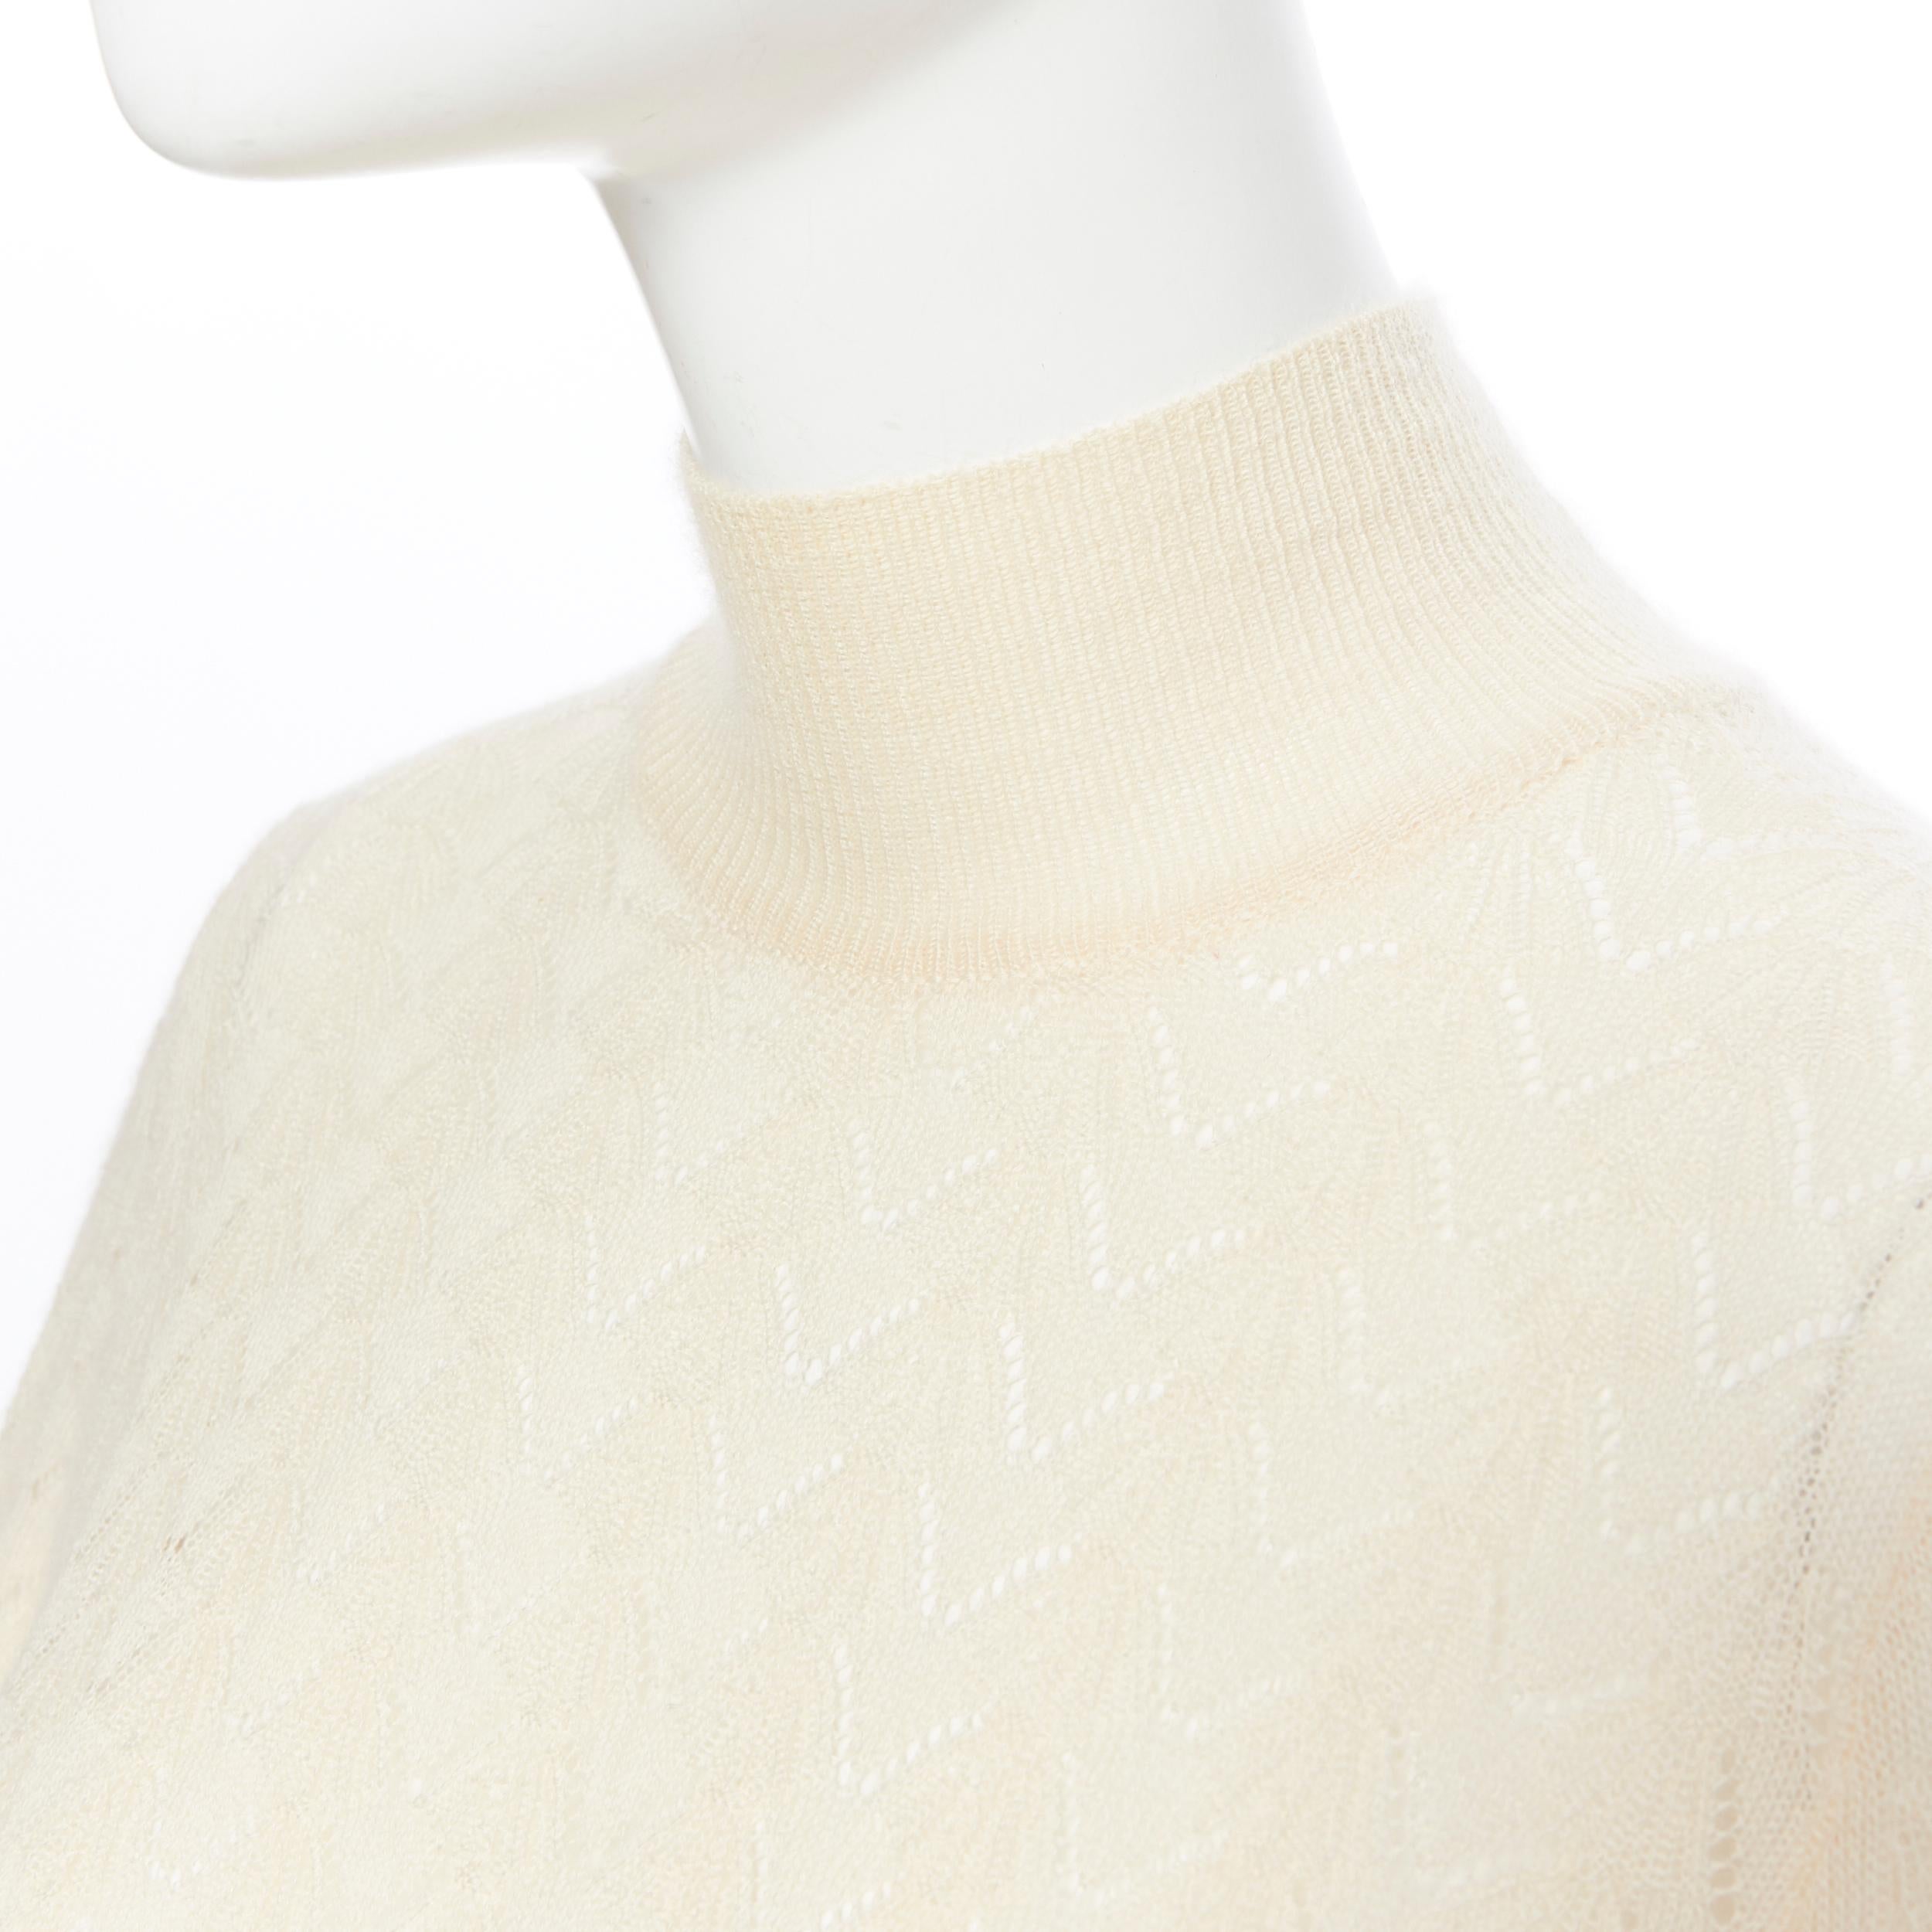 LOUIS VUITTON 100% cashmere cream beige lace knit  turtleneck sweater top M
Brand: Louis Vuitton
Model Name / Style: Cashmere turtleneck
Material: Cashmere
Color: Beige
Pattern: Geometric
Extra Detail: Long sleeve. Turtleneck neckline.
Made in: